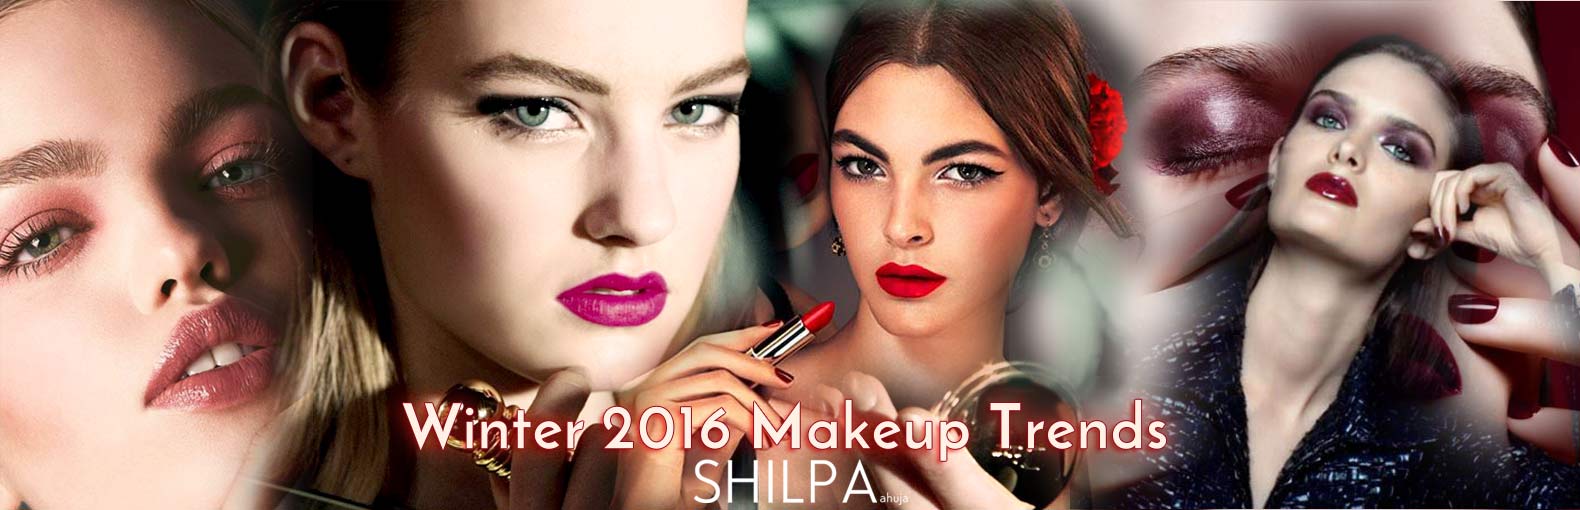 top-latest-winter-2016-makeup-trends-smokey-eye-looks-tips-ideas-best-2015